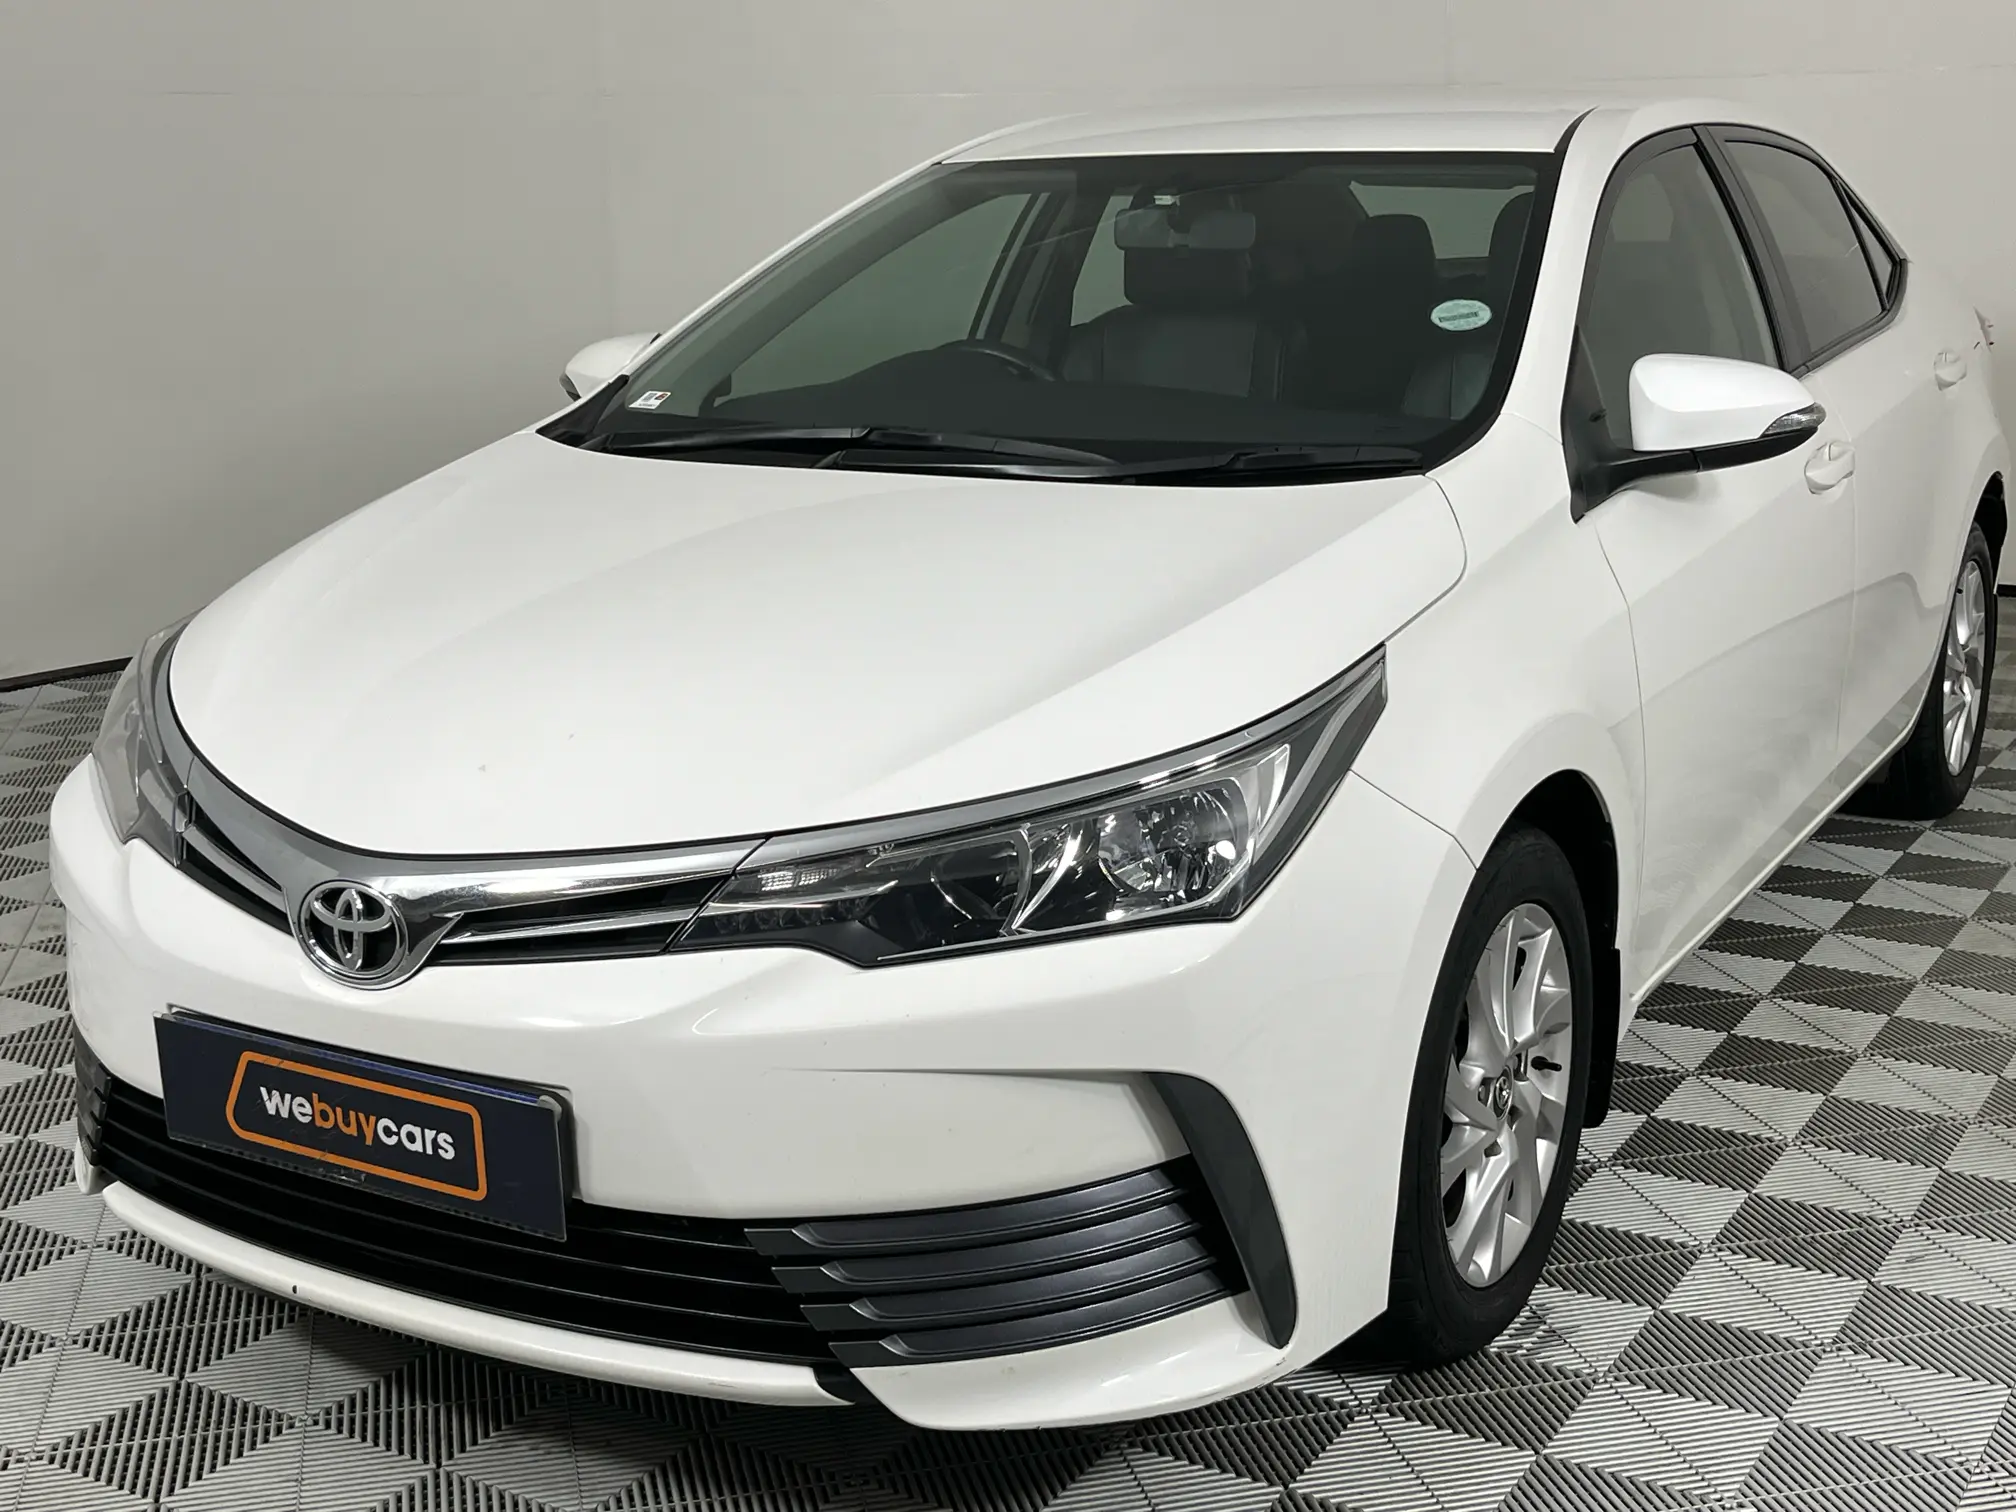 2018 Toyota Corolla 1.6 Prestige CVT